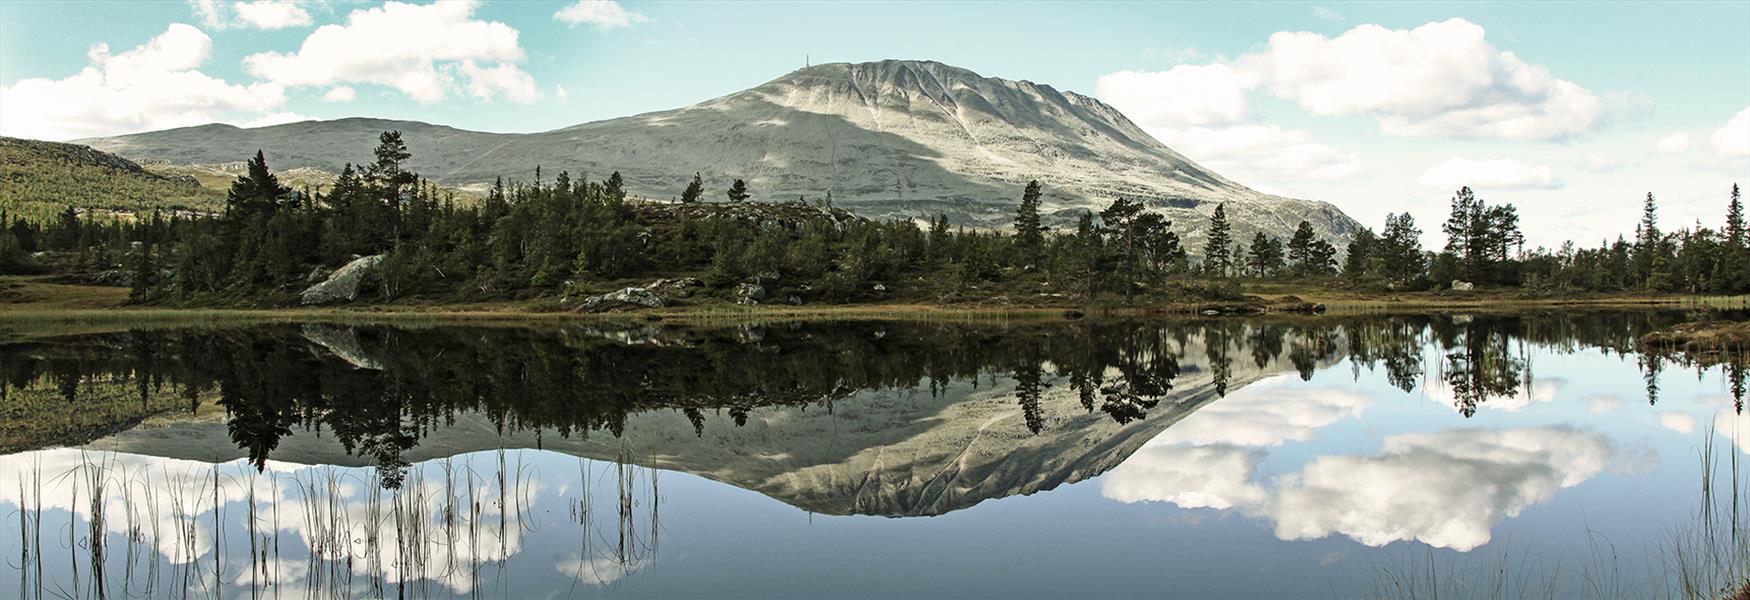 Mount Gausta, Southern Norways highest peak